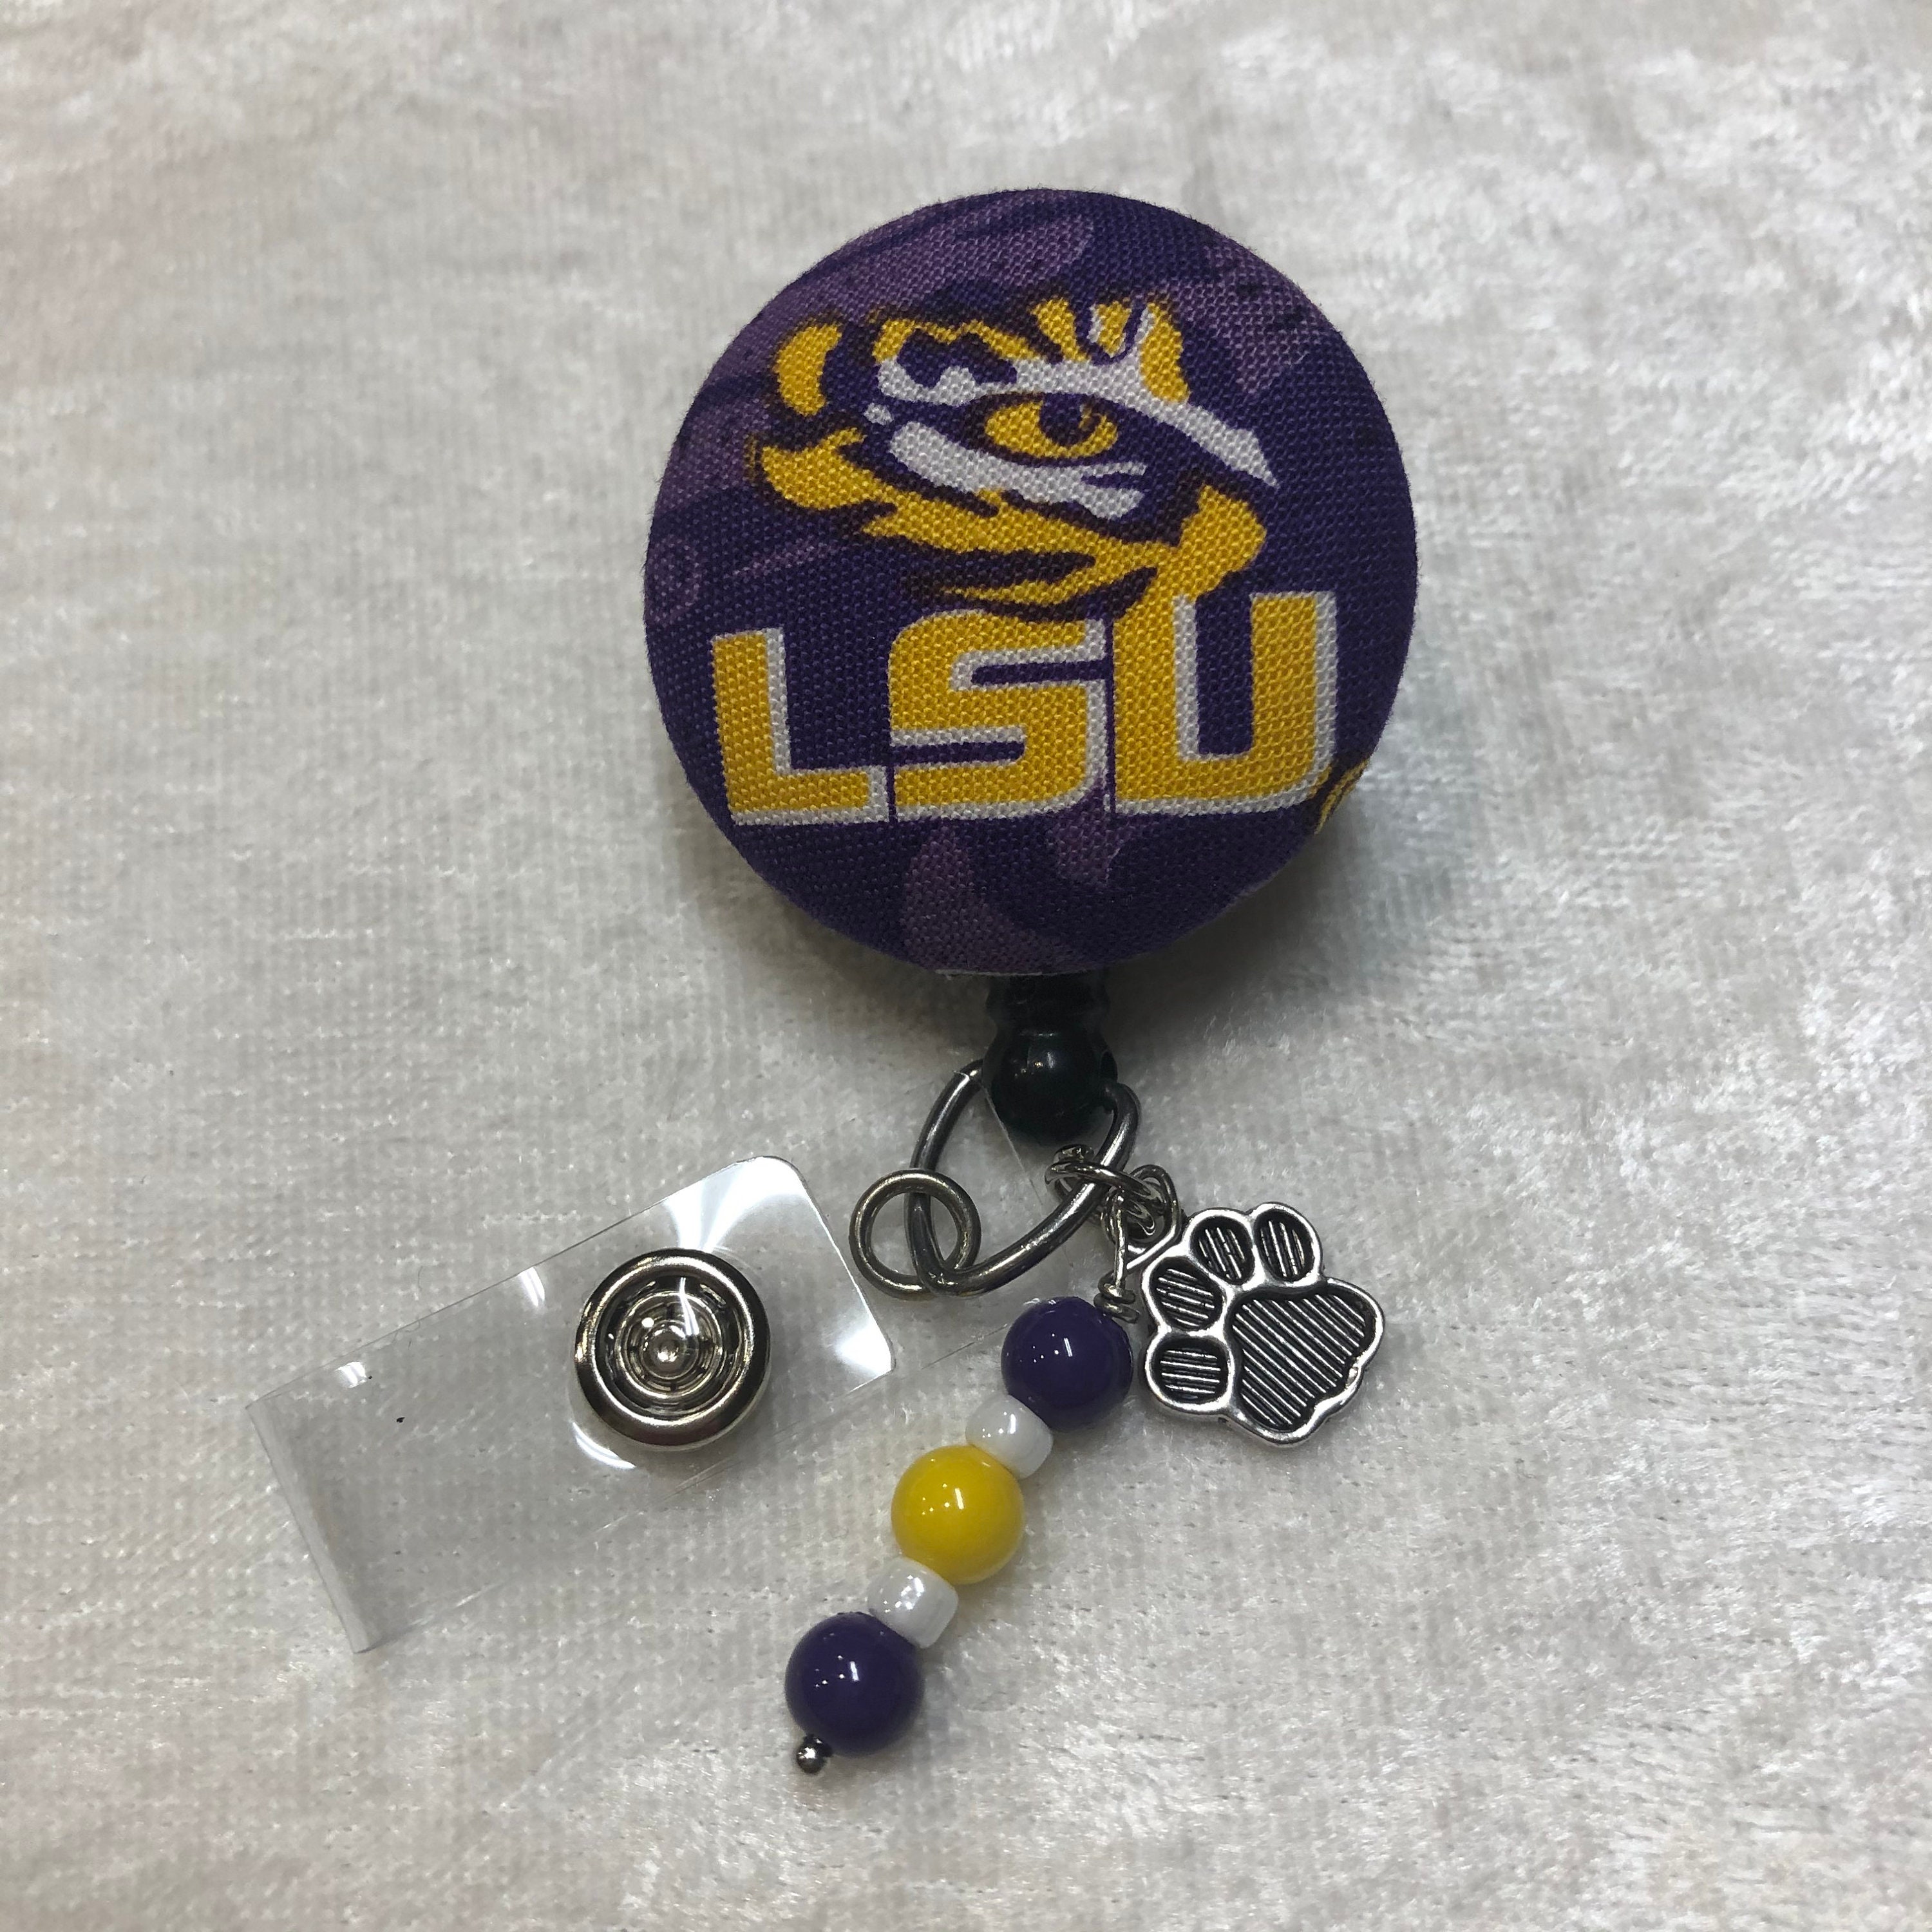 LSU Louisiana State University Retractable Badge Holder Ticket Clip Reel ID